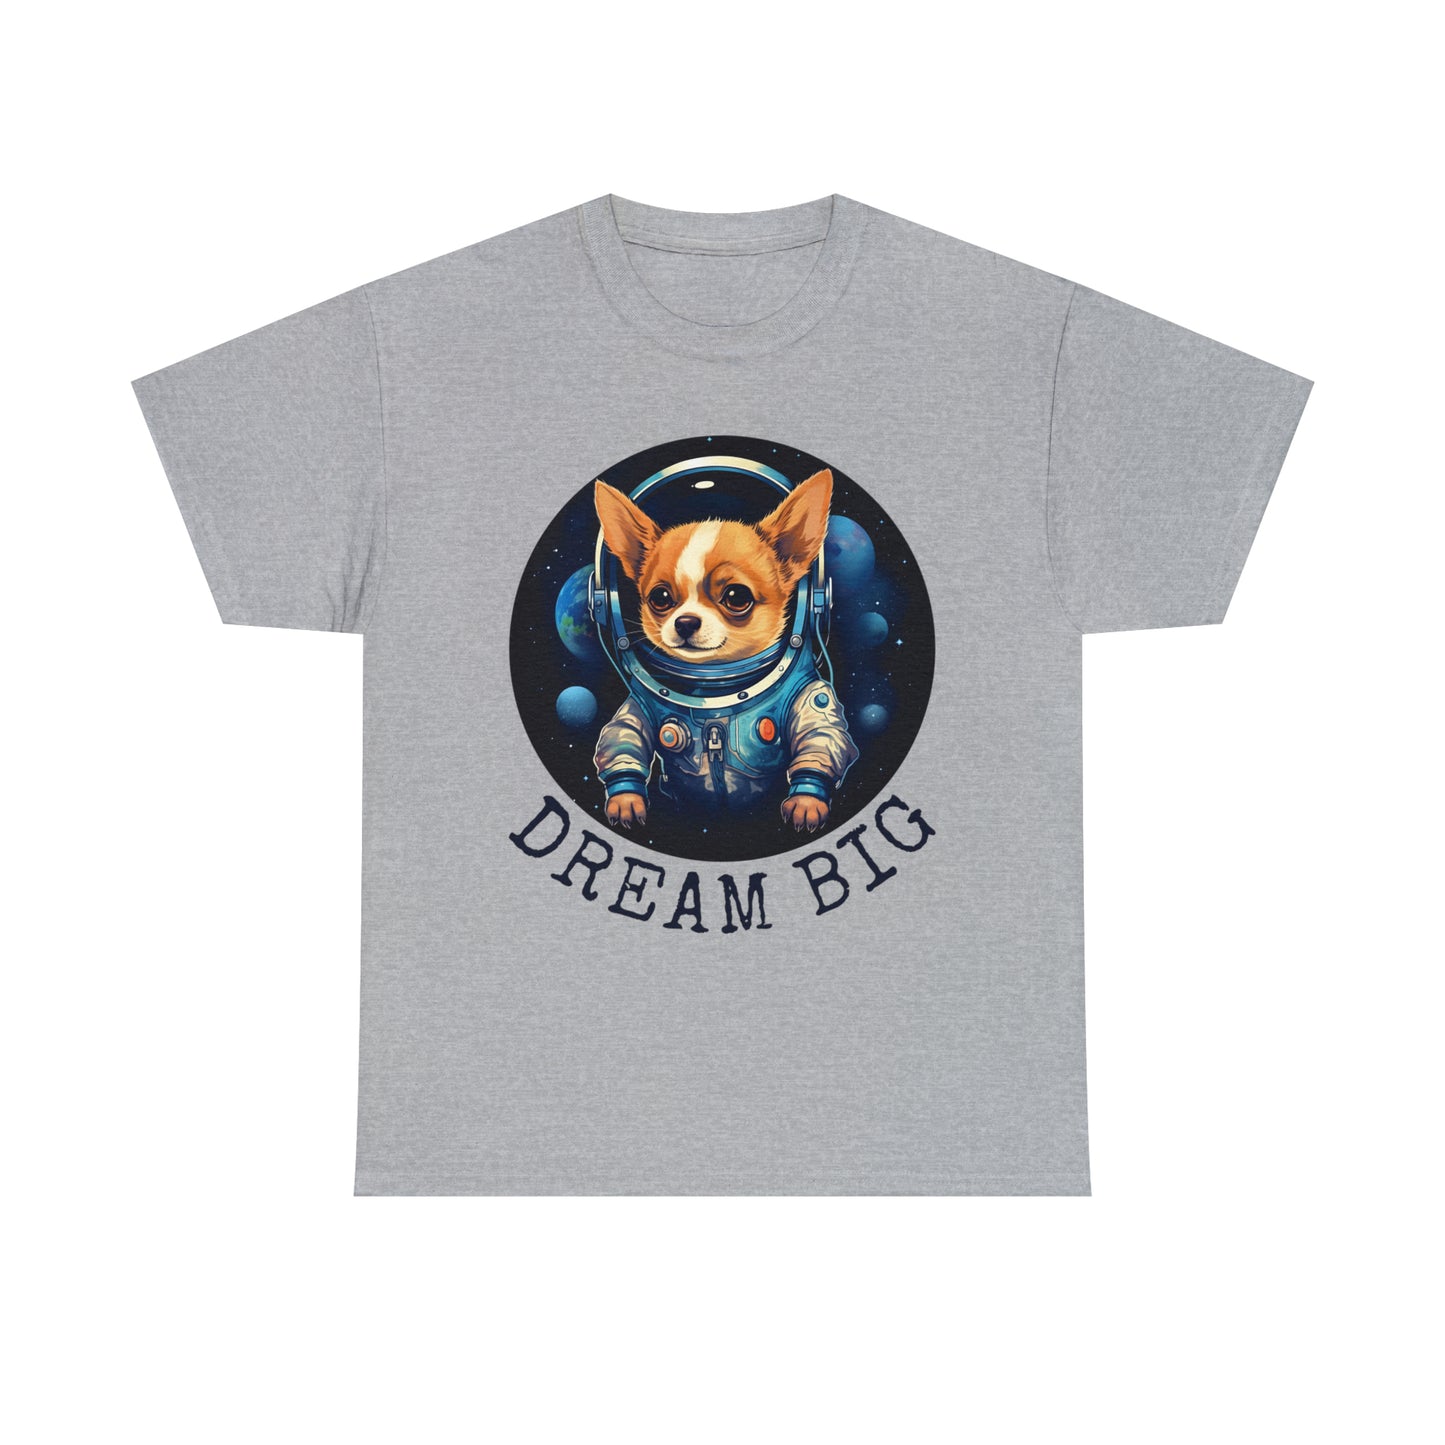 Dog lover tee shirts